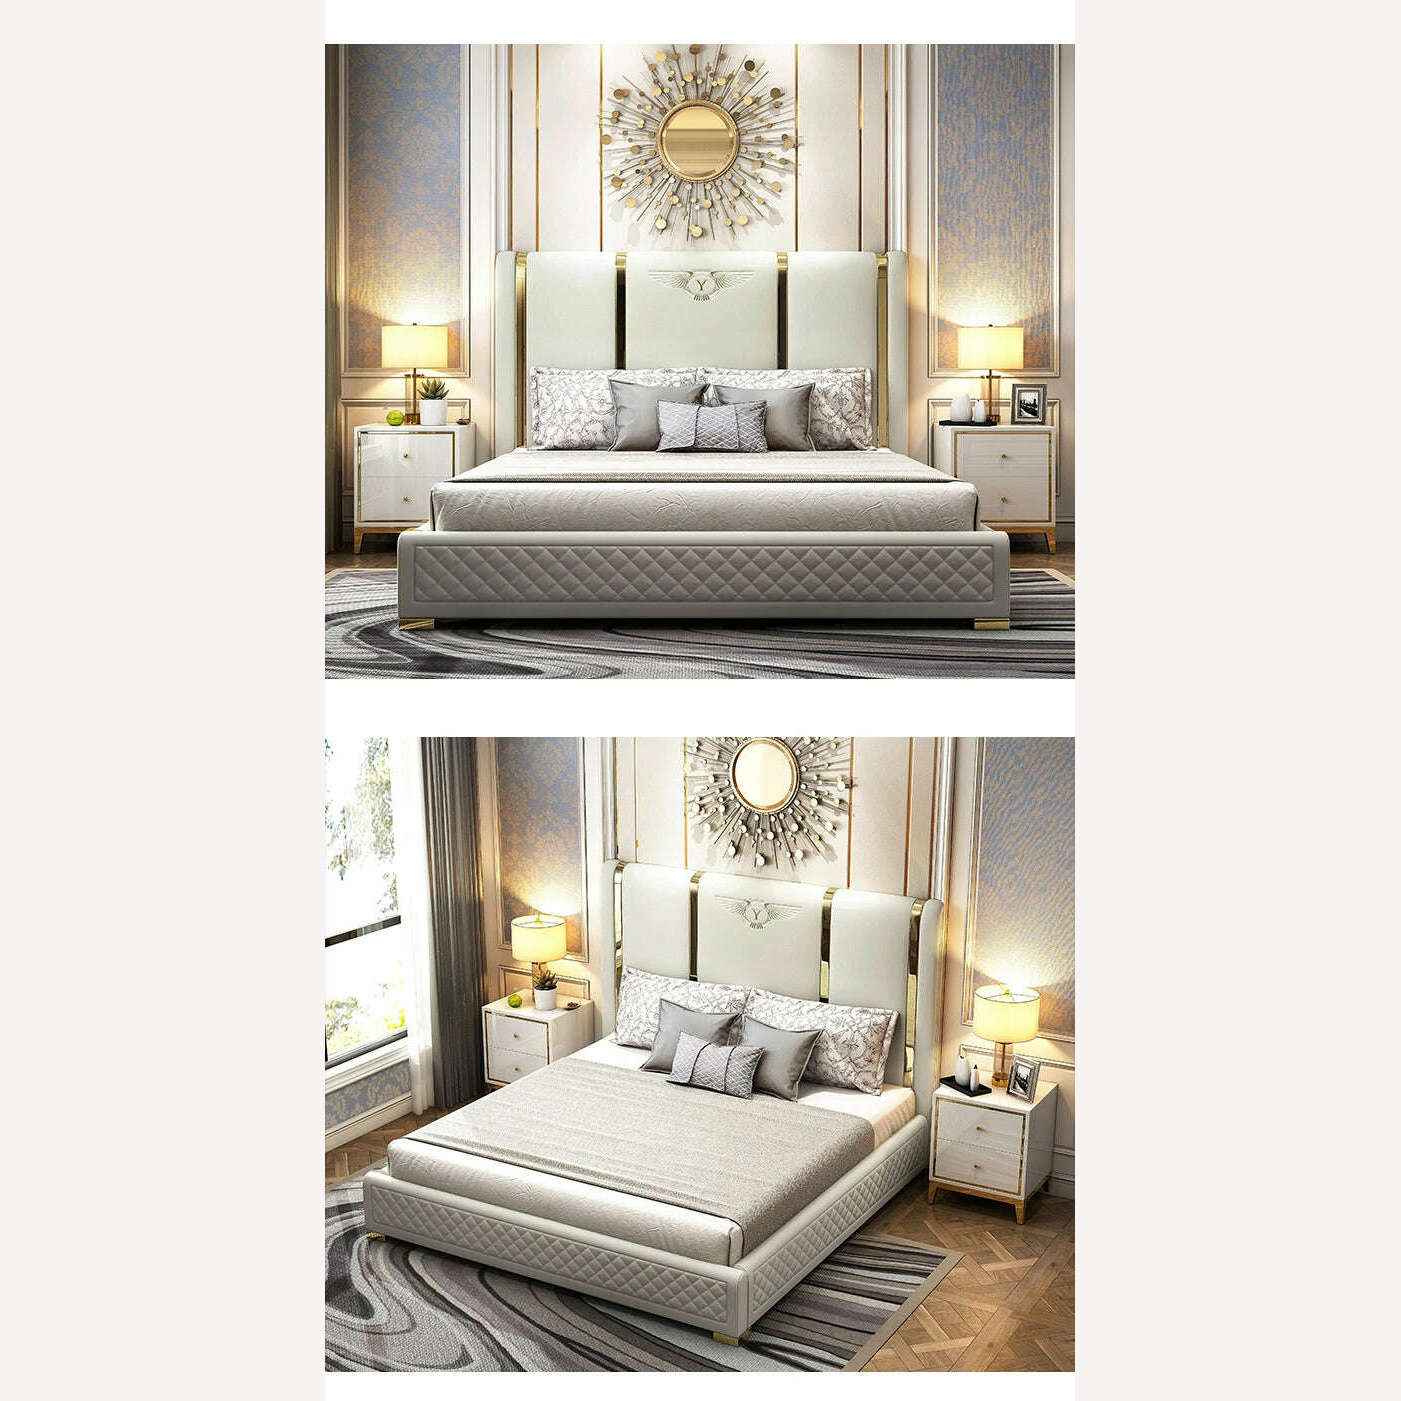 KIMLUD, Genuine Leather entry lux bed frame modern Nordic camas ultimate bed кровать двуспальная lit beds سرير  muebles de dormitorio ме, KIMLUD Womens Clothes